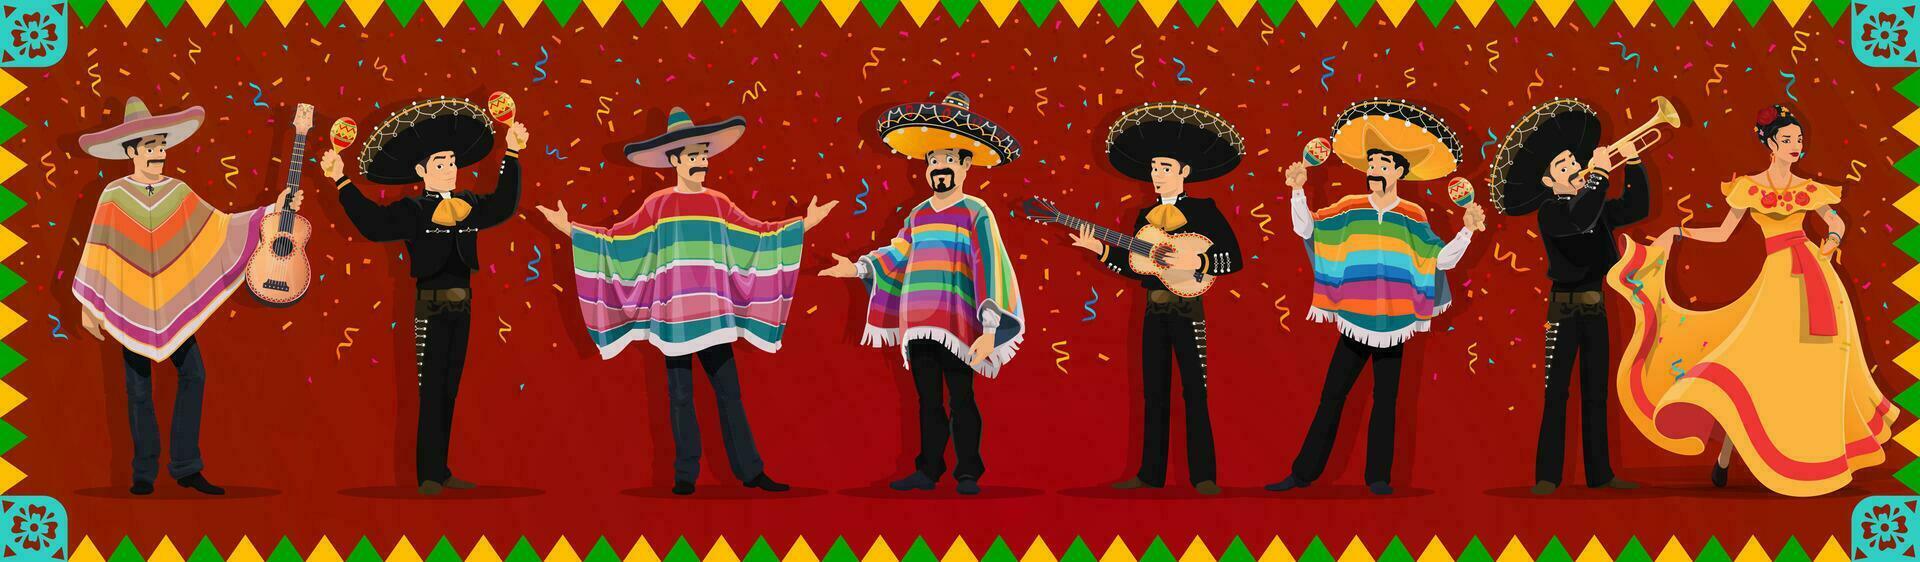 dibujos animados mexicano caracteres en fiesta carnaval vector